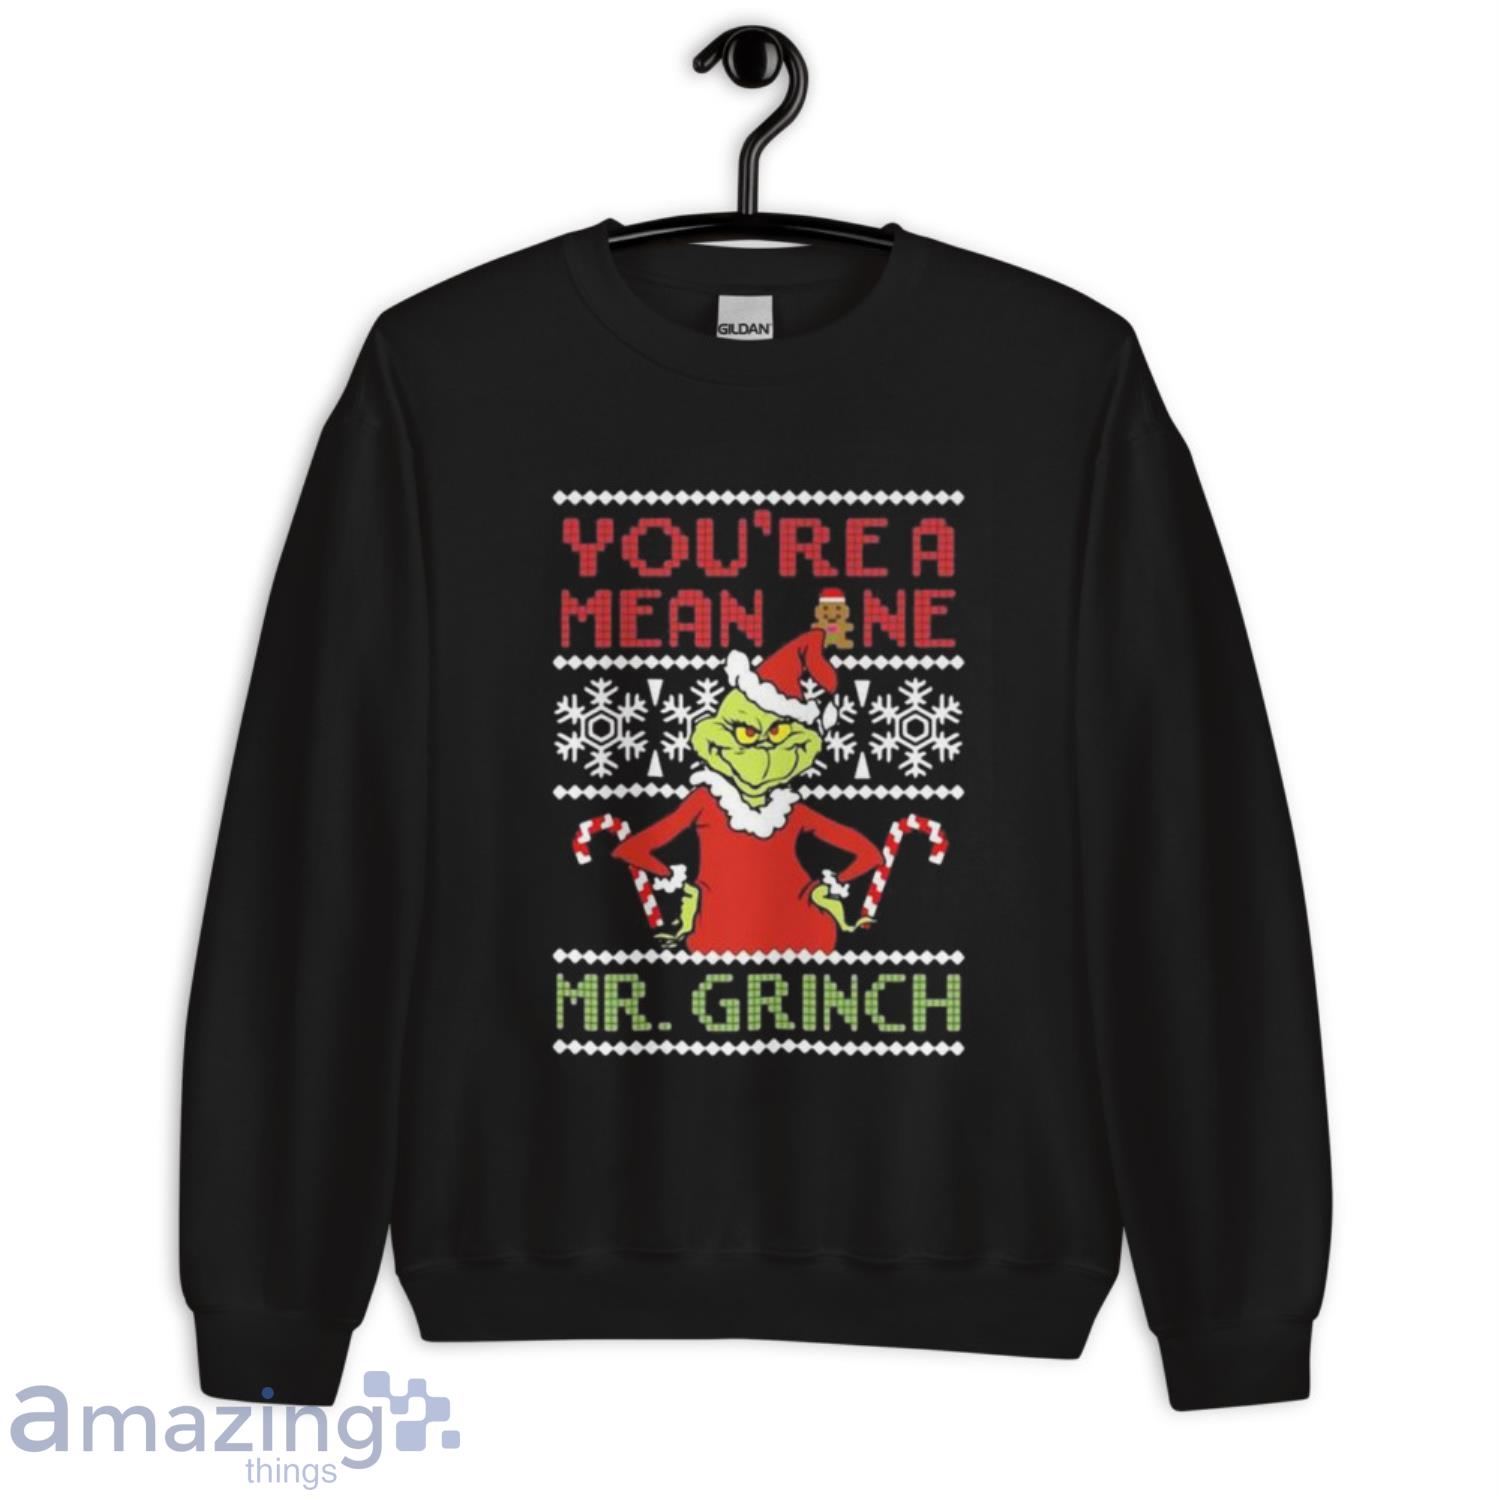 https://image.whatamazingthings.com/2022/11/youre-a-mean-one-mr-grinch-christmas-shirt-2.jpeg